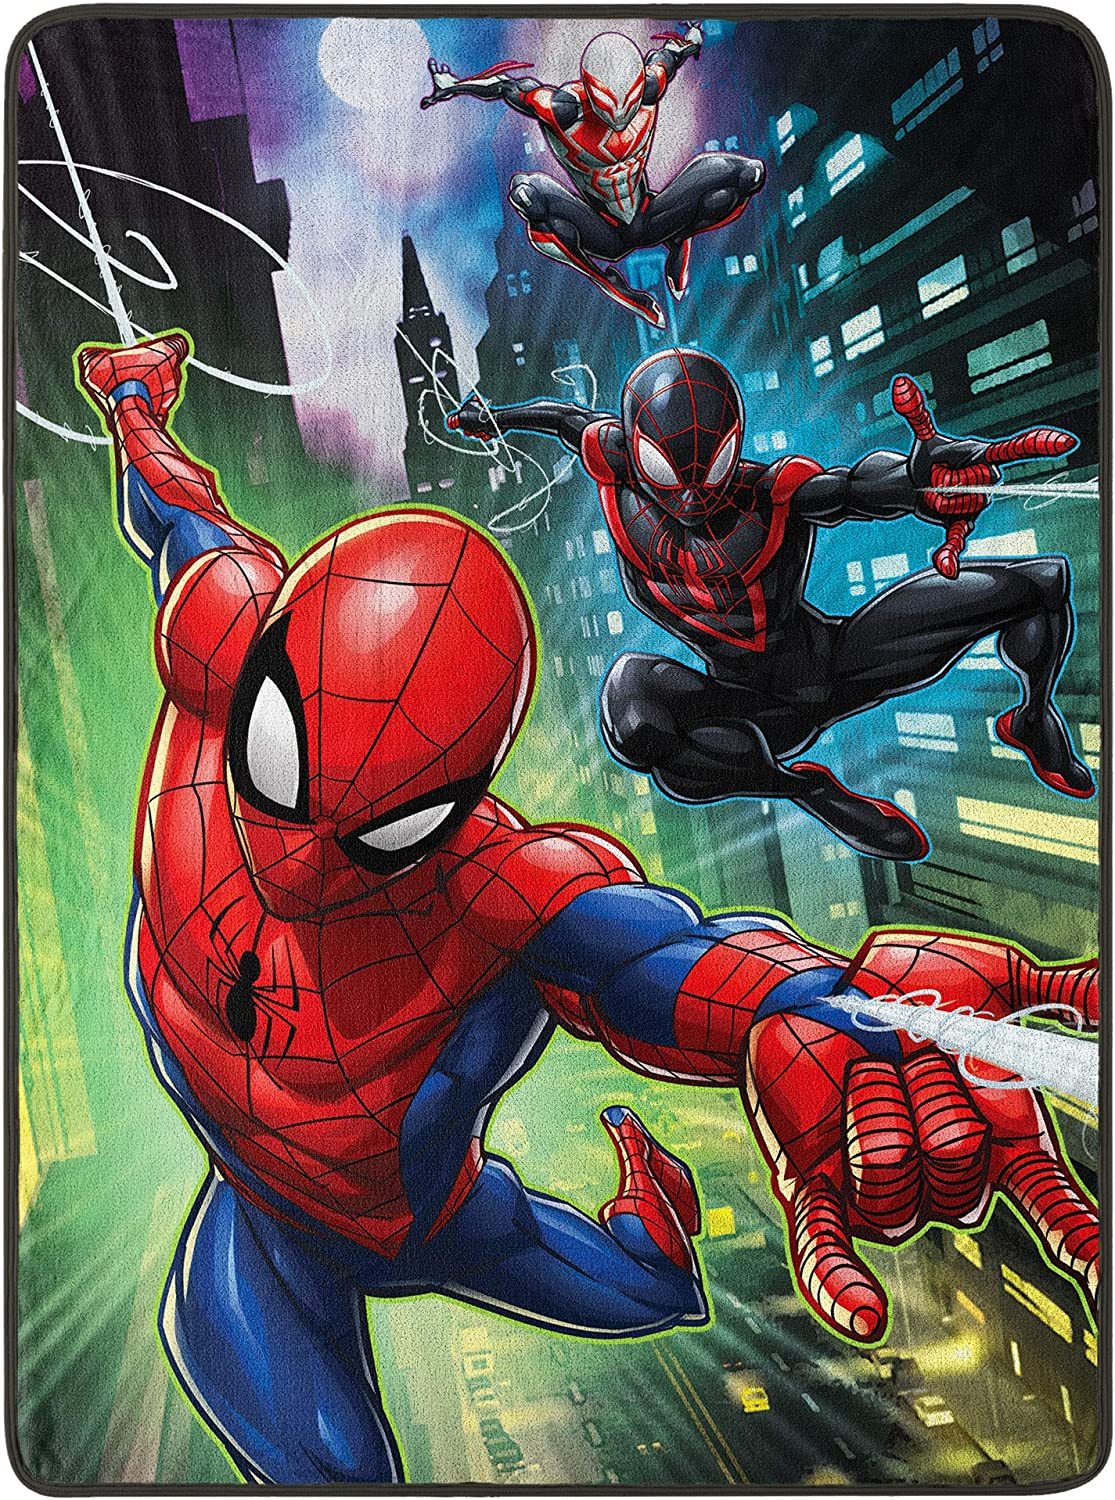 Marvel's Spider-Man, "Swing City" Micro Raschel Throw Blanket, 46" x 60", Multi - $33.99